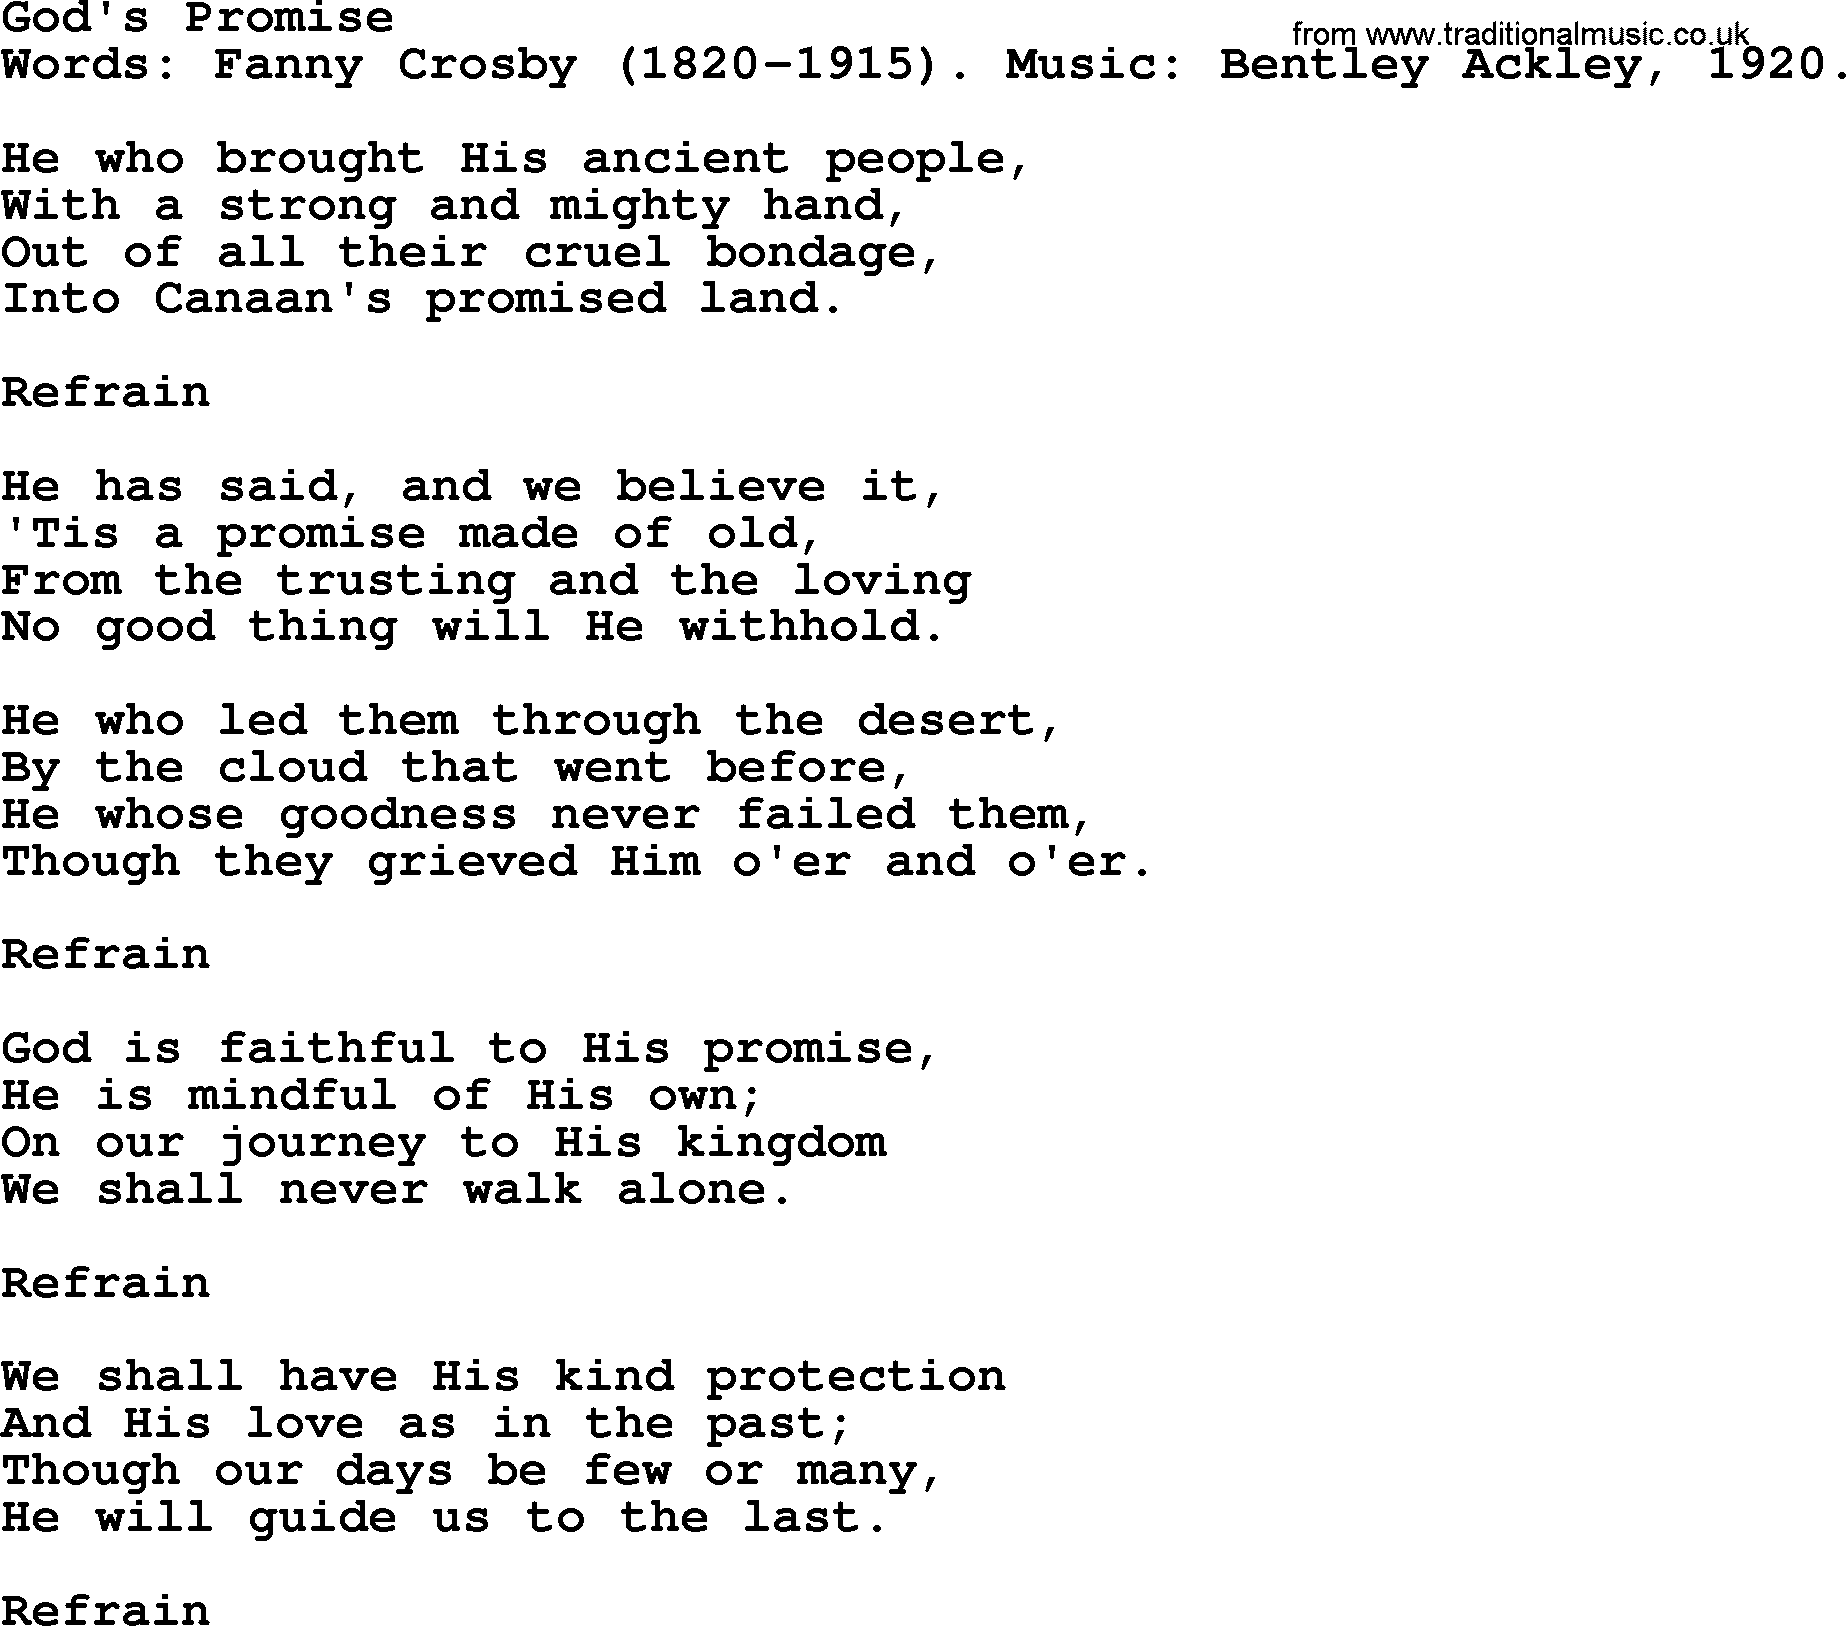 Fanny Crosby song: God's Promise, lyrics